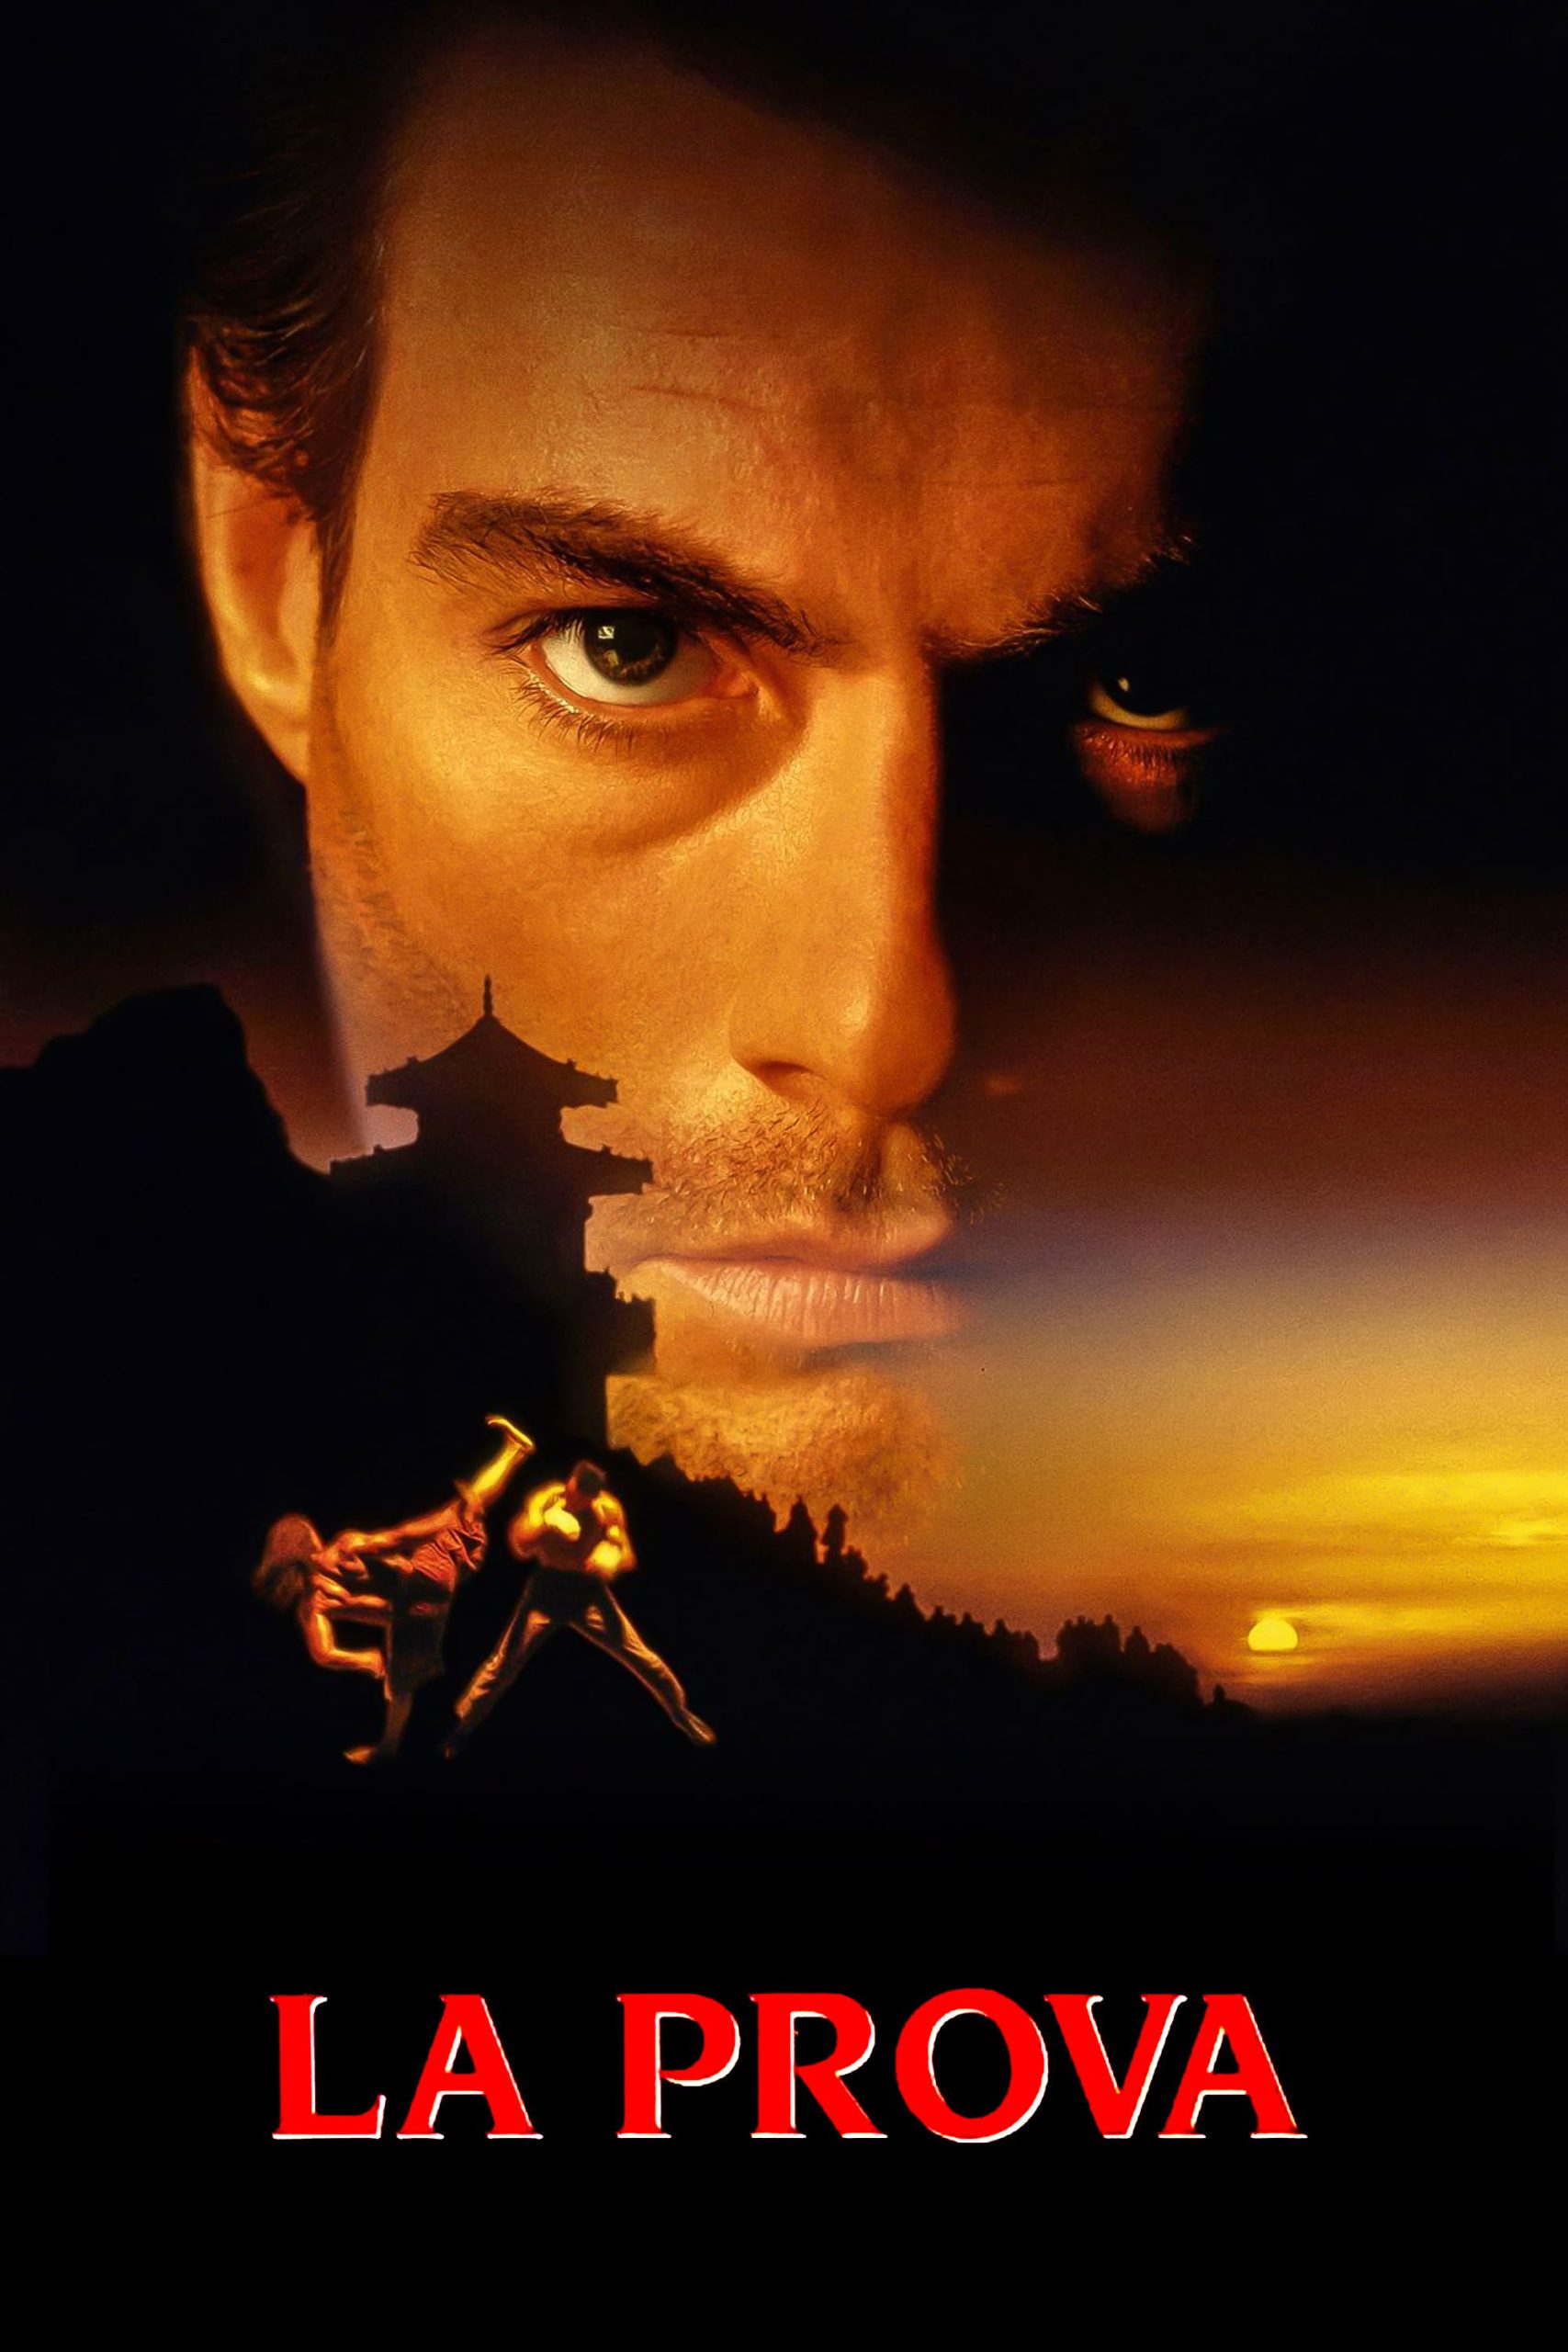 La prova [HD] (1996)